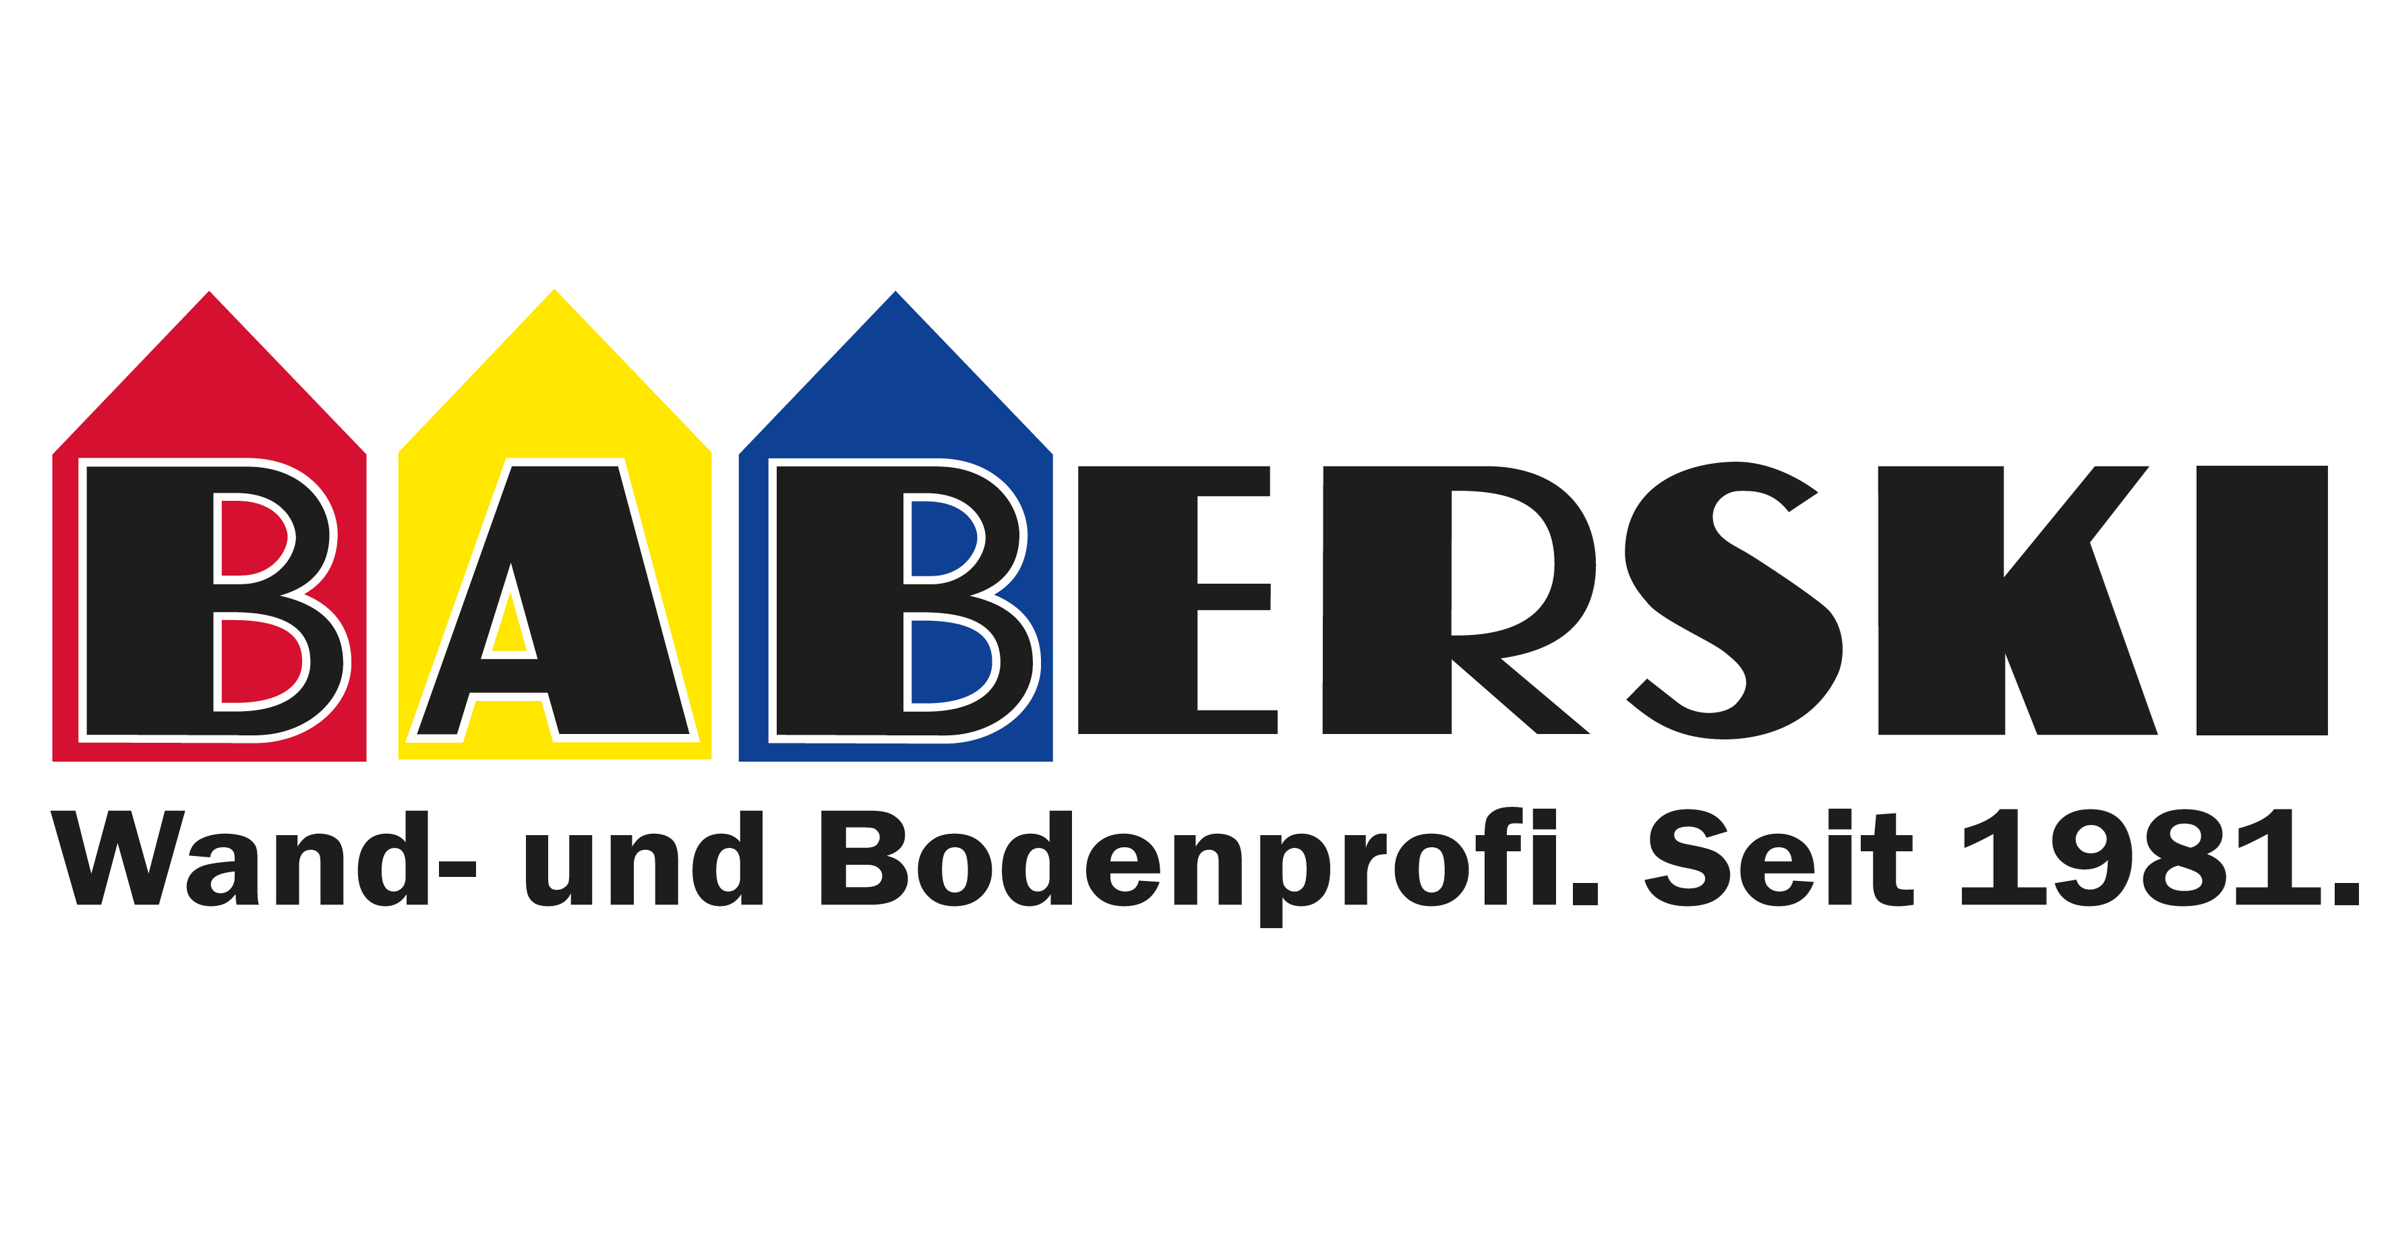 Baberski_Logo